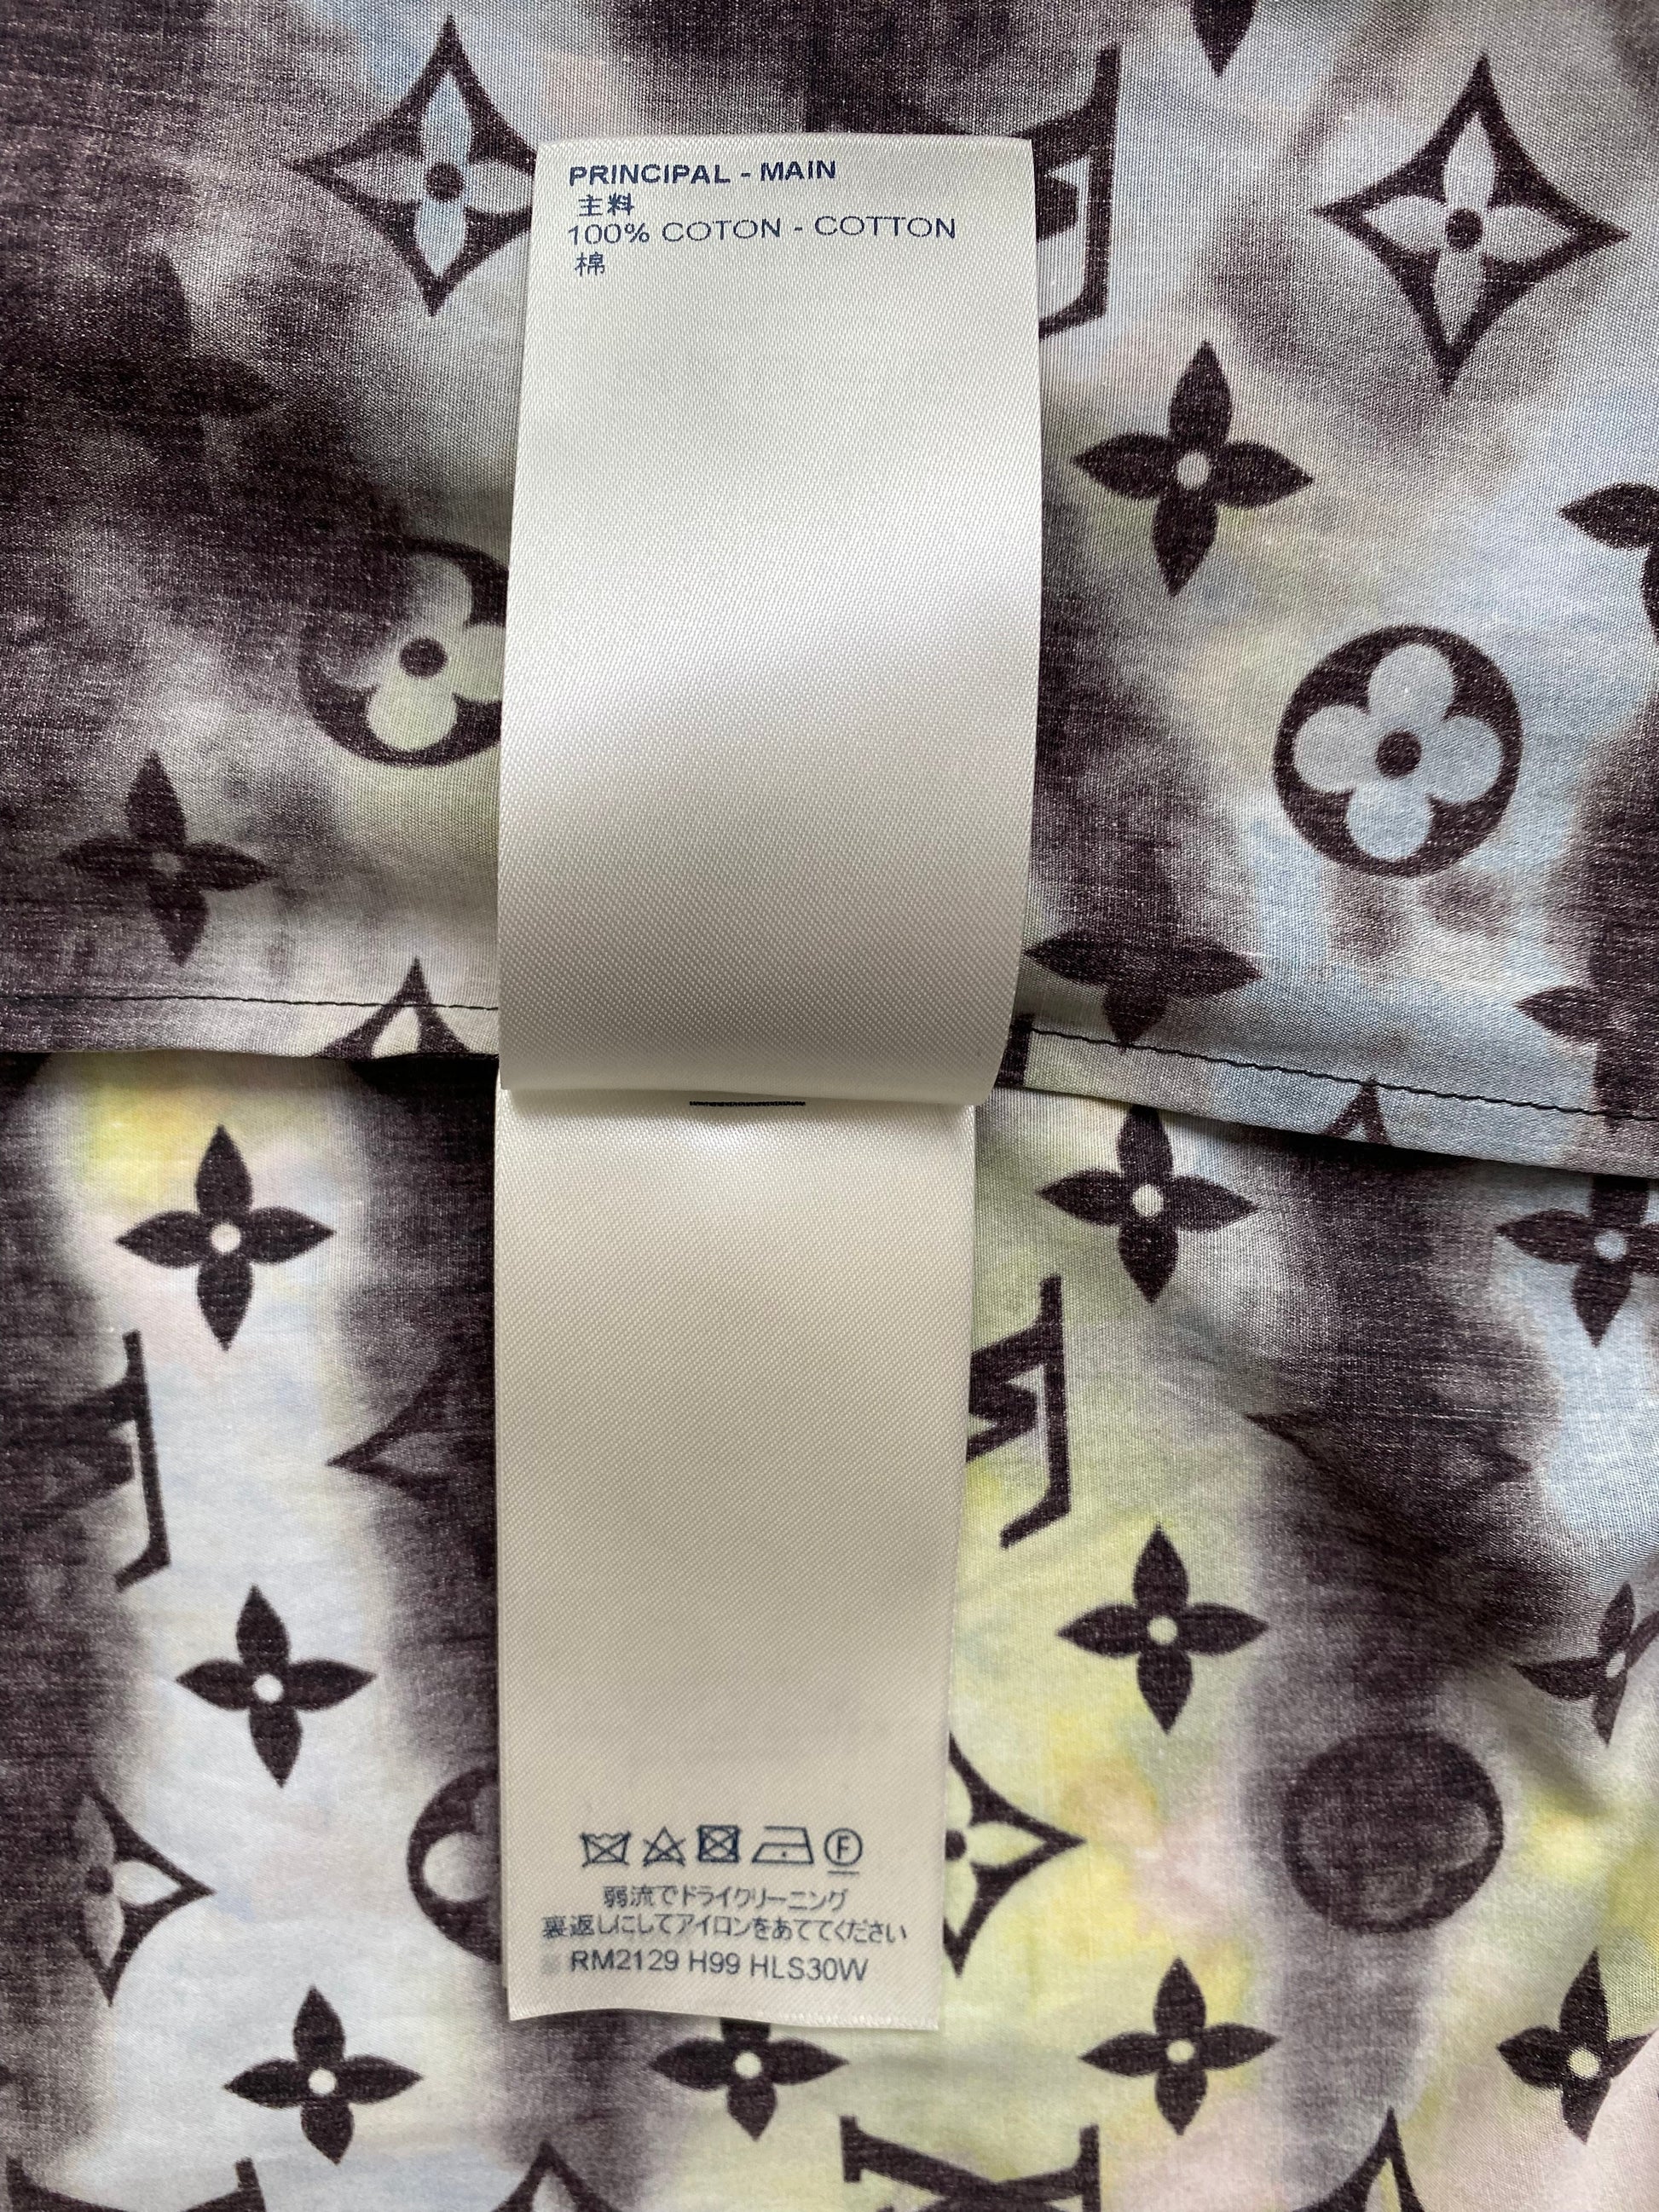 Louis Vuitton Tie Dye Monogram Shirt